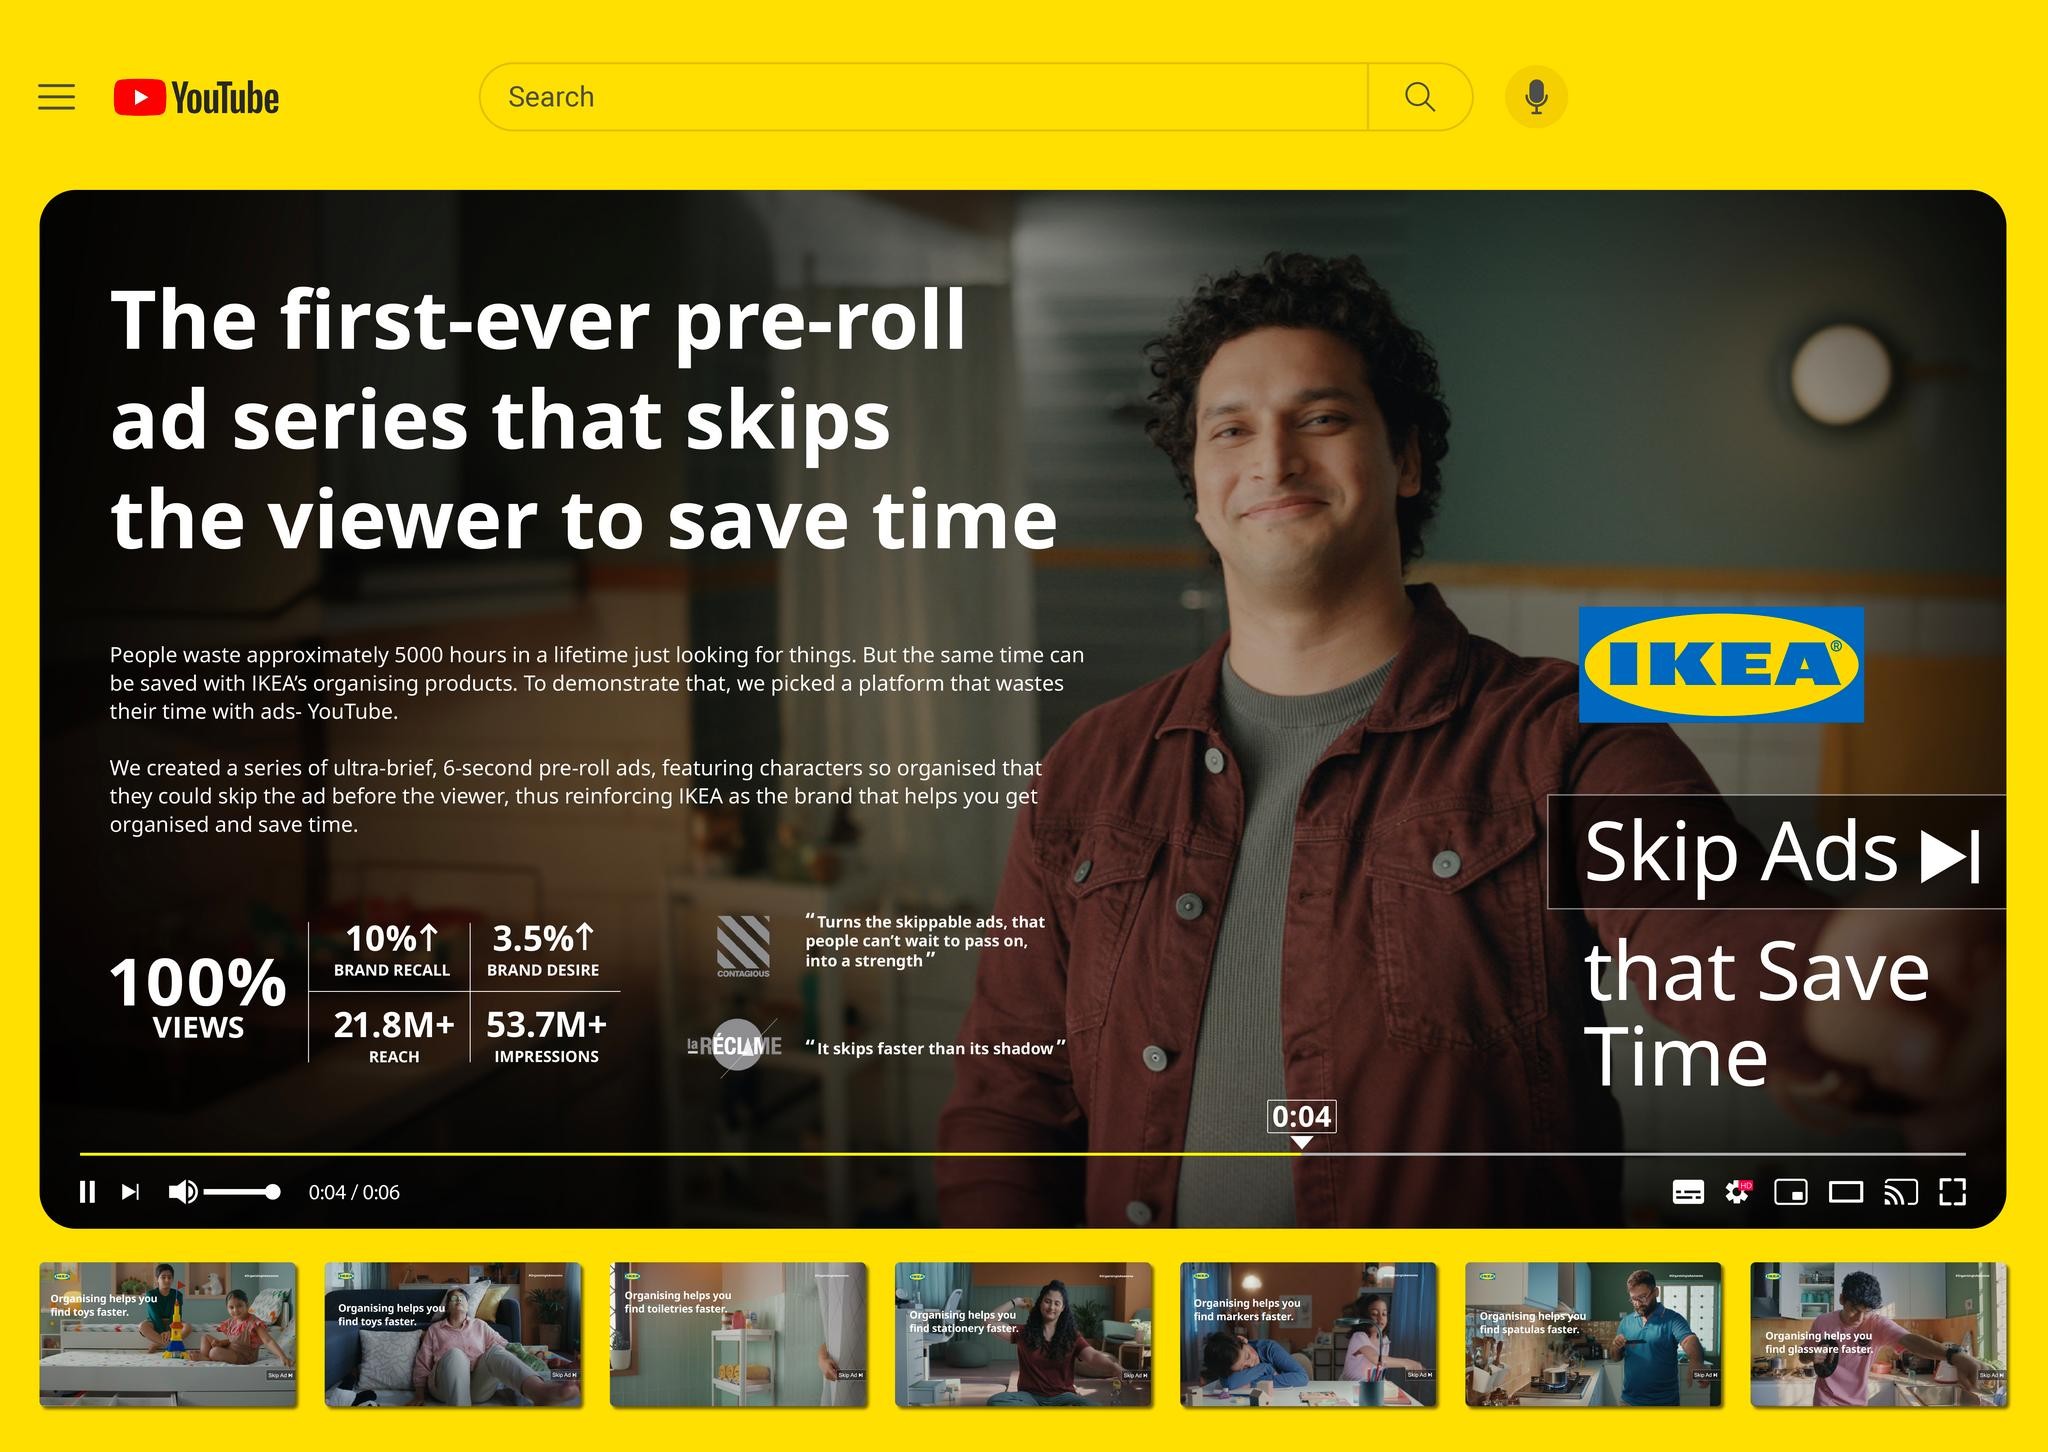 IKEA SKIP ADS THAT SAVE TIME